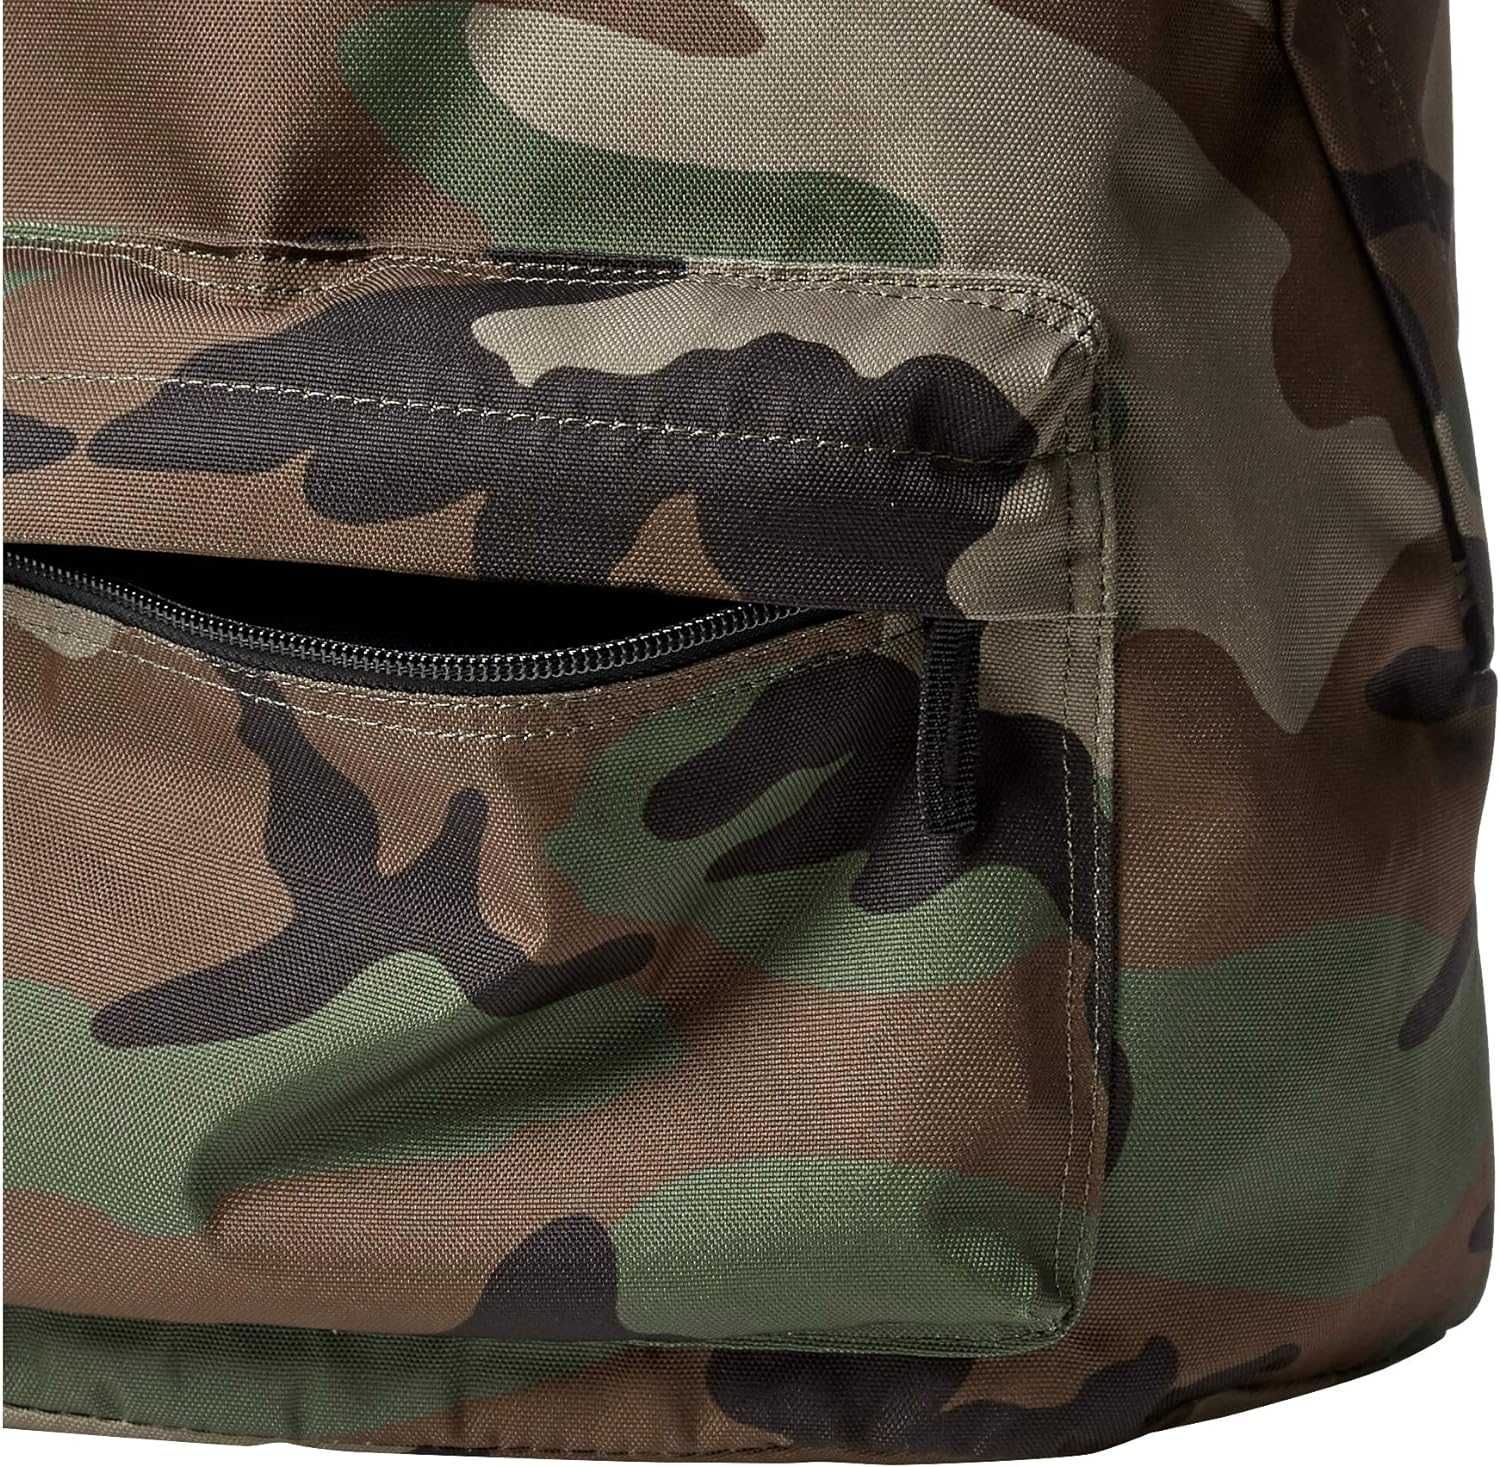 Рюкзак Amazon Basics Everyday Backpack! Новый с бирками!